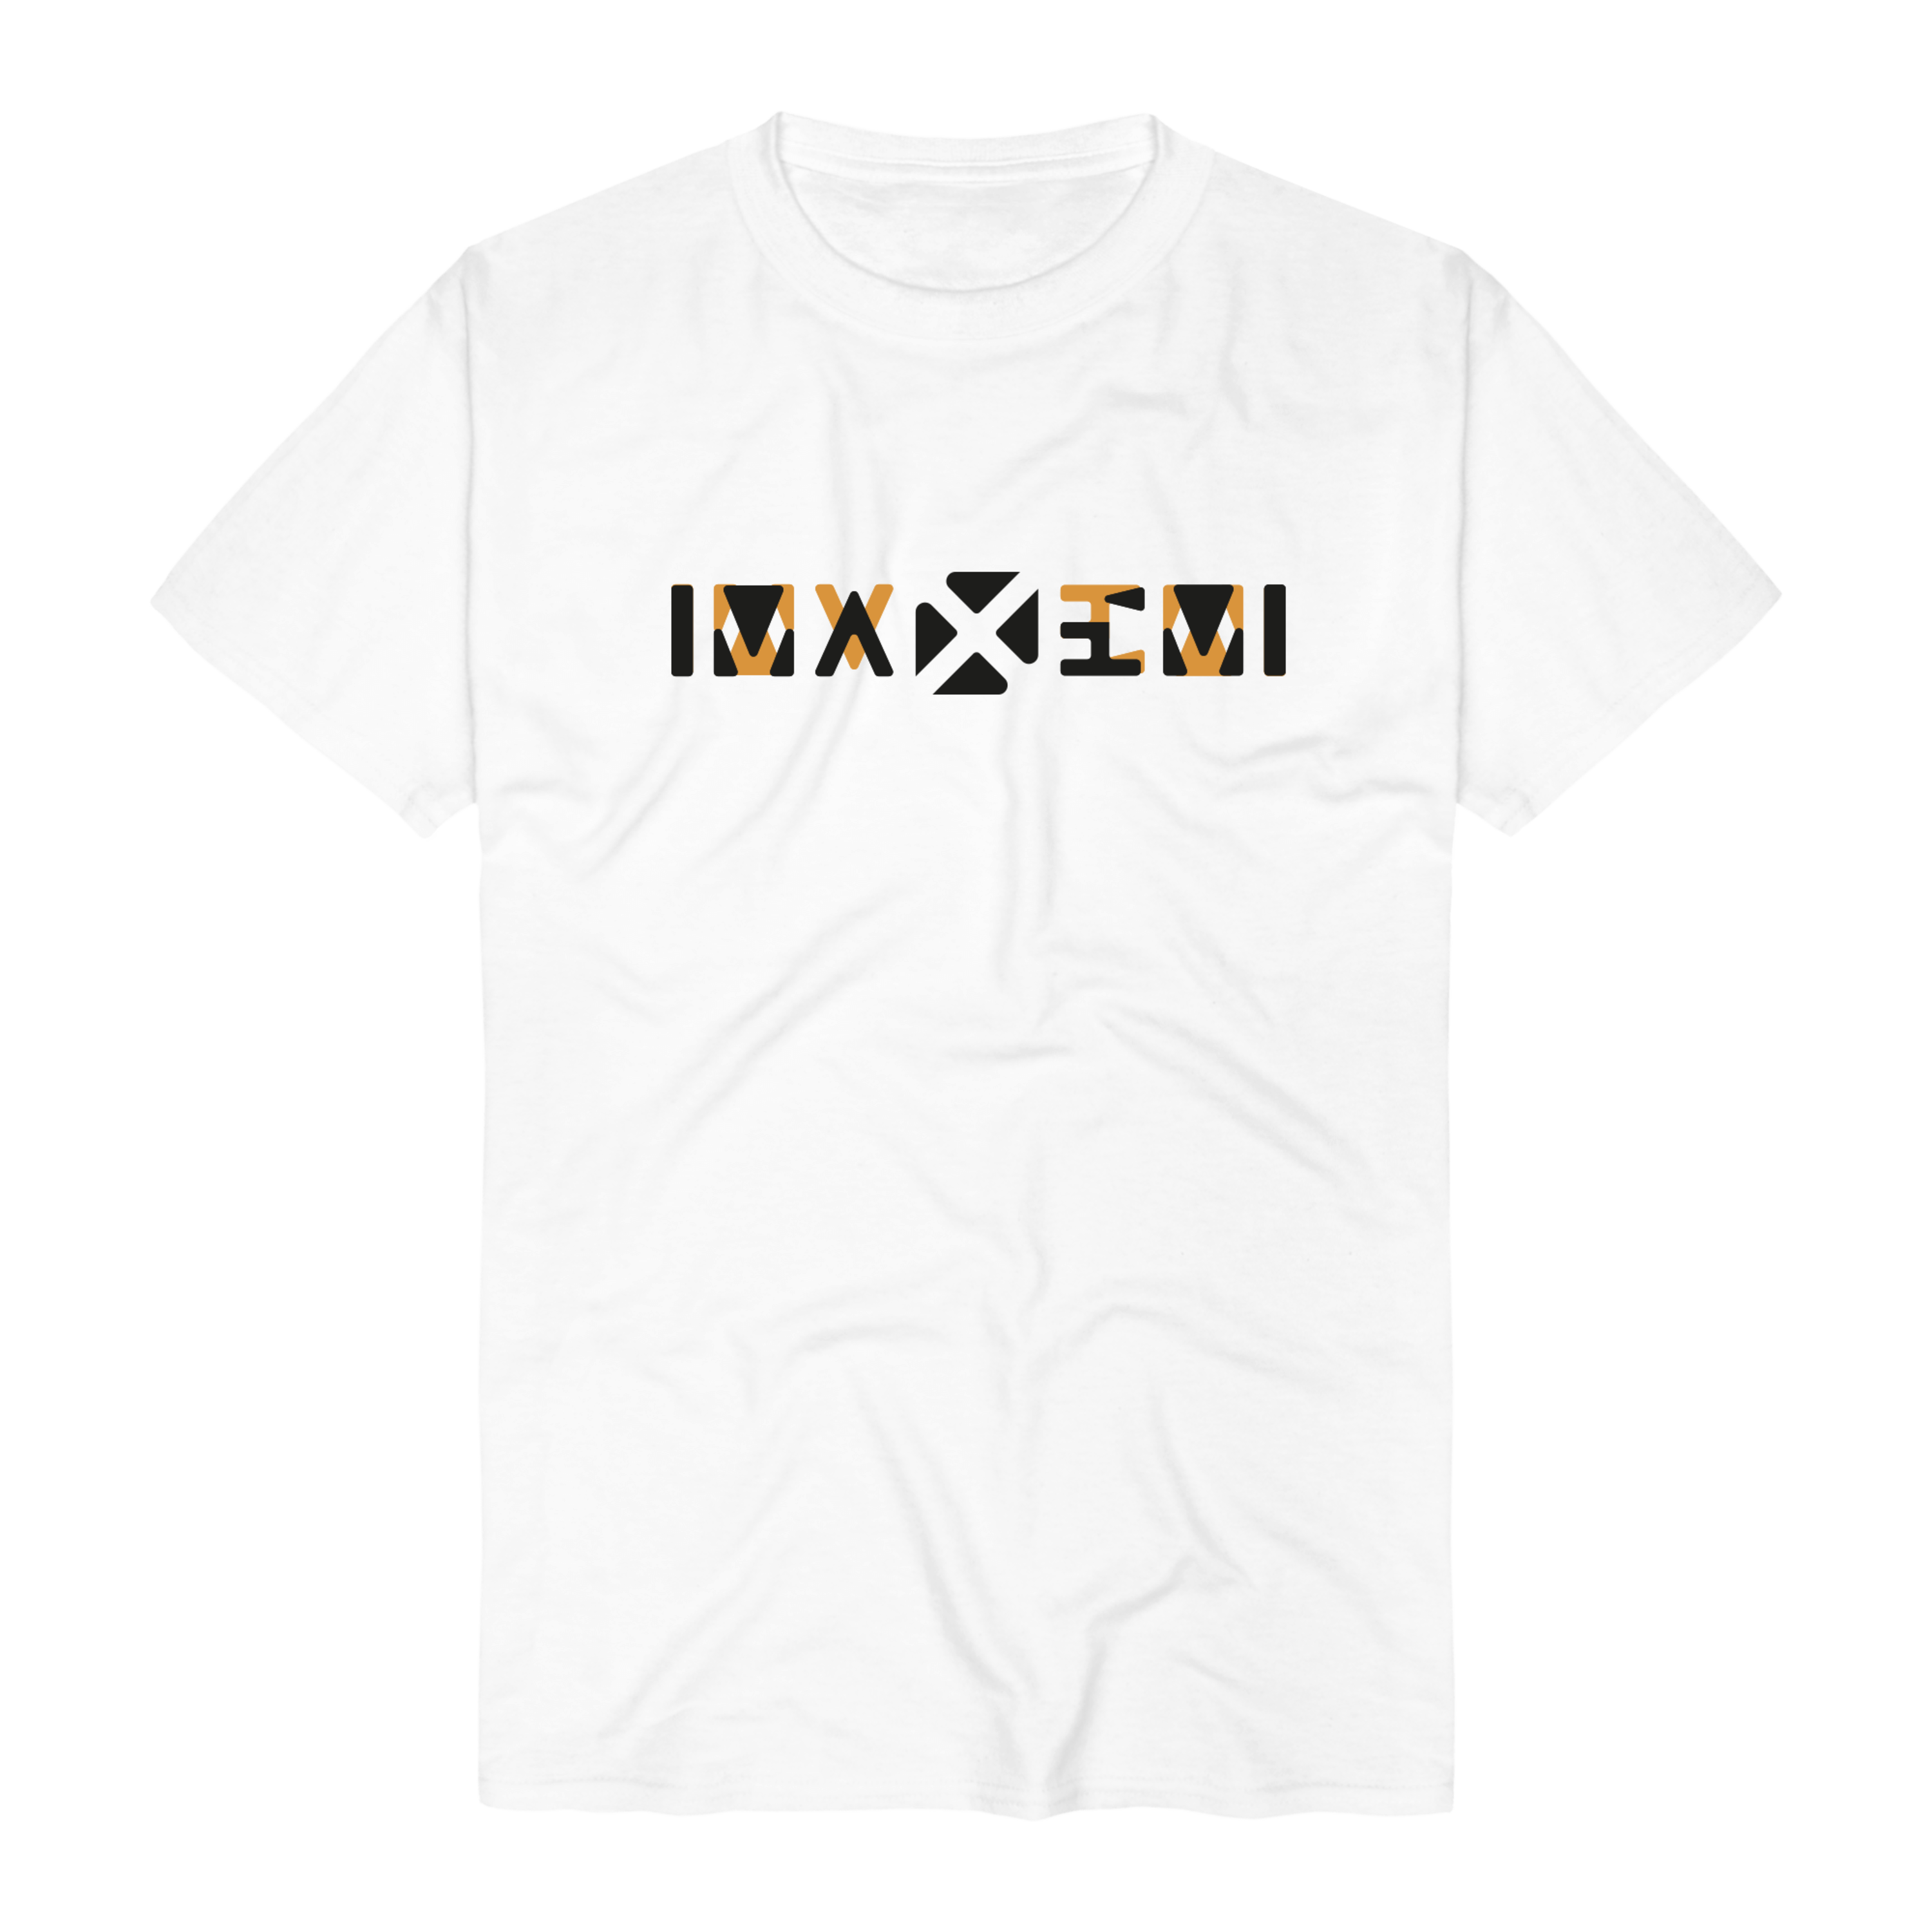 https://images.bravado.de/prod/product-assets/product-asset-data/maxim/maxim-1/products/139297/web/304198/image-thumb__304198__3000x3000_original/Maxim-Logo-T-Shirt-weiss-139297-304198.png